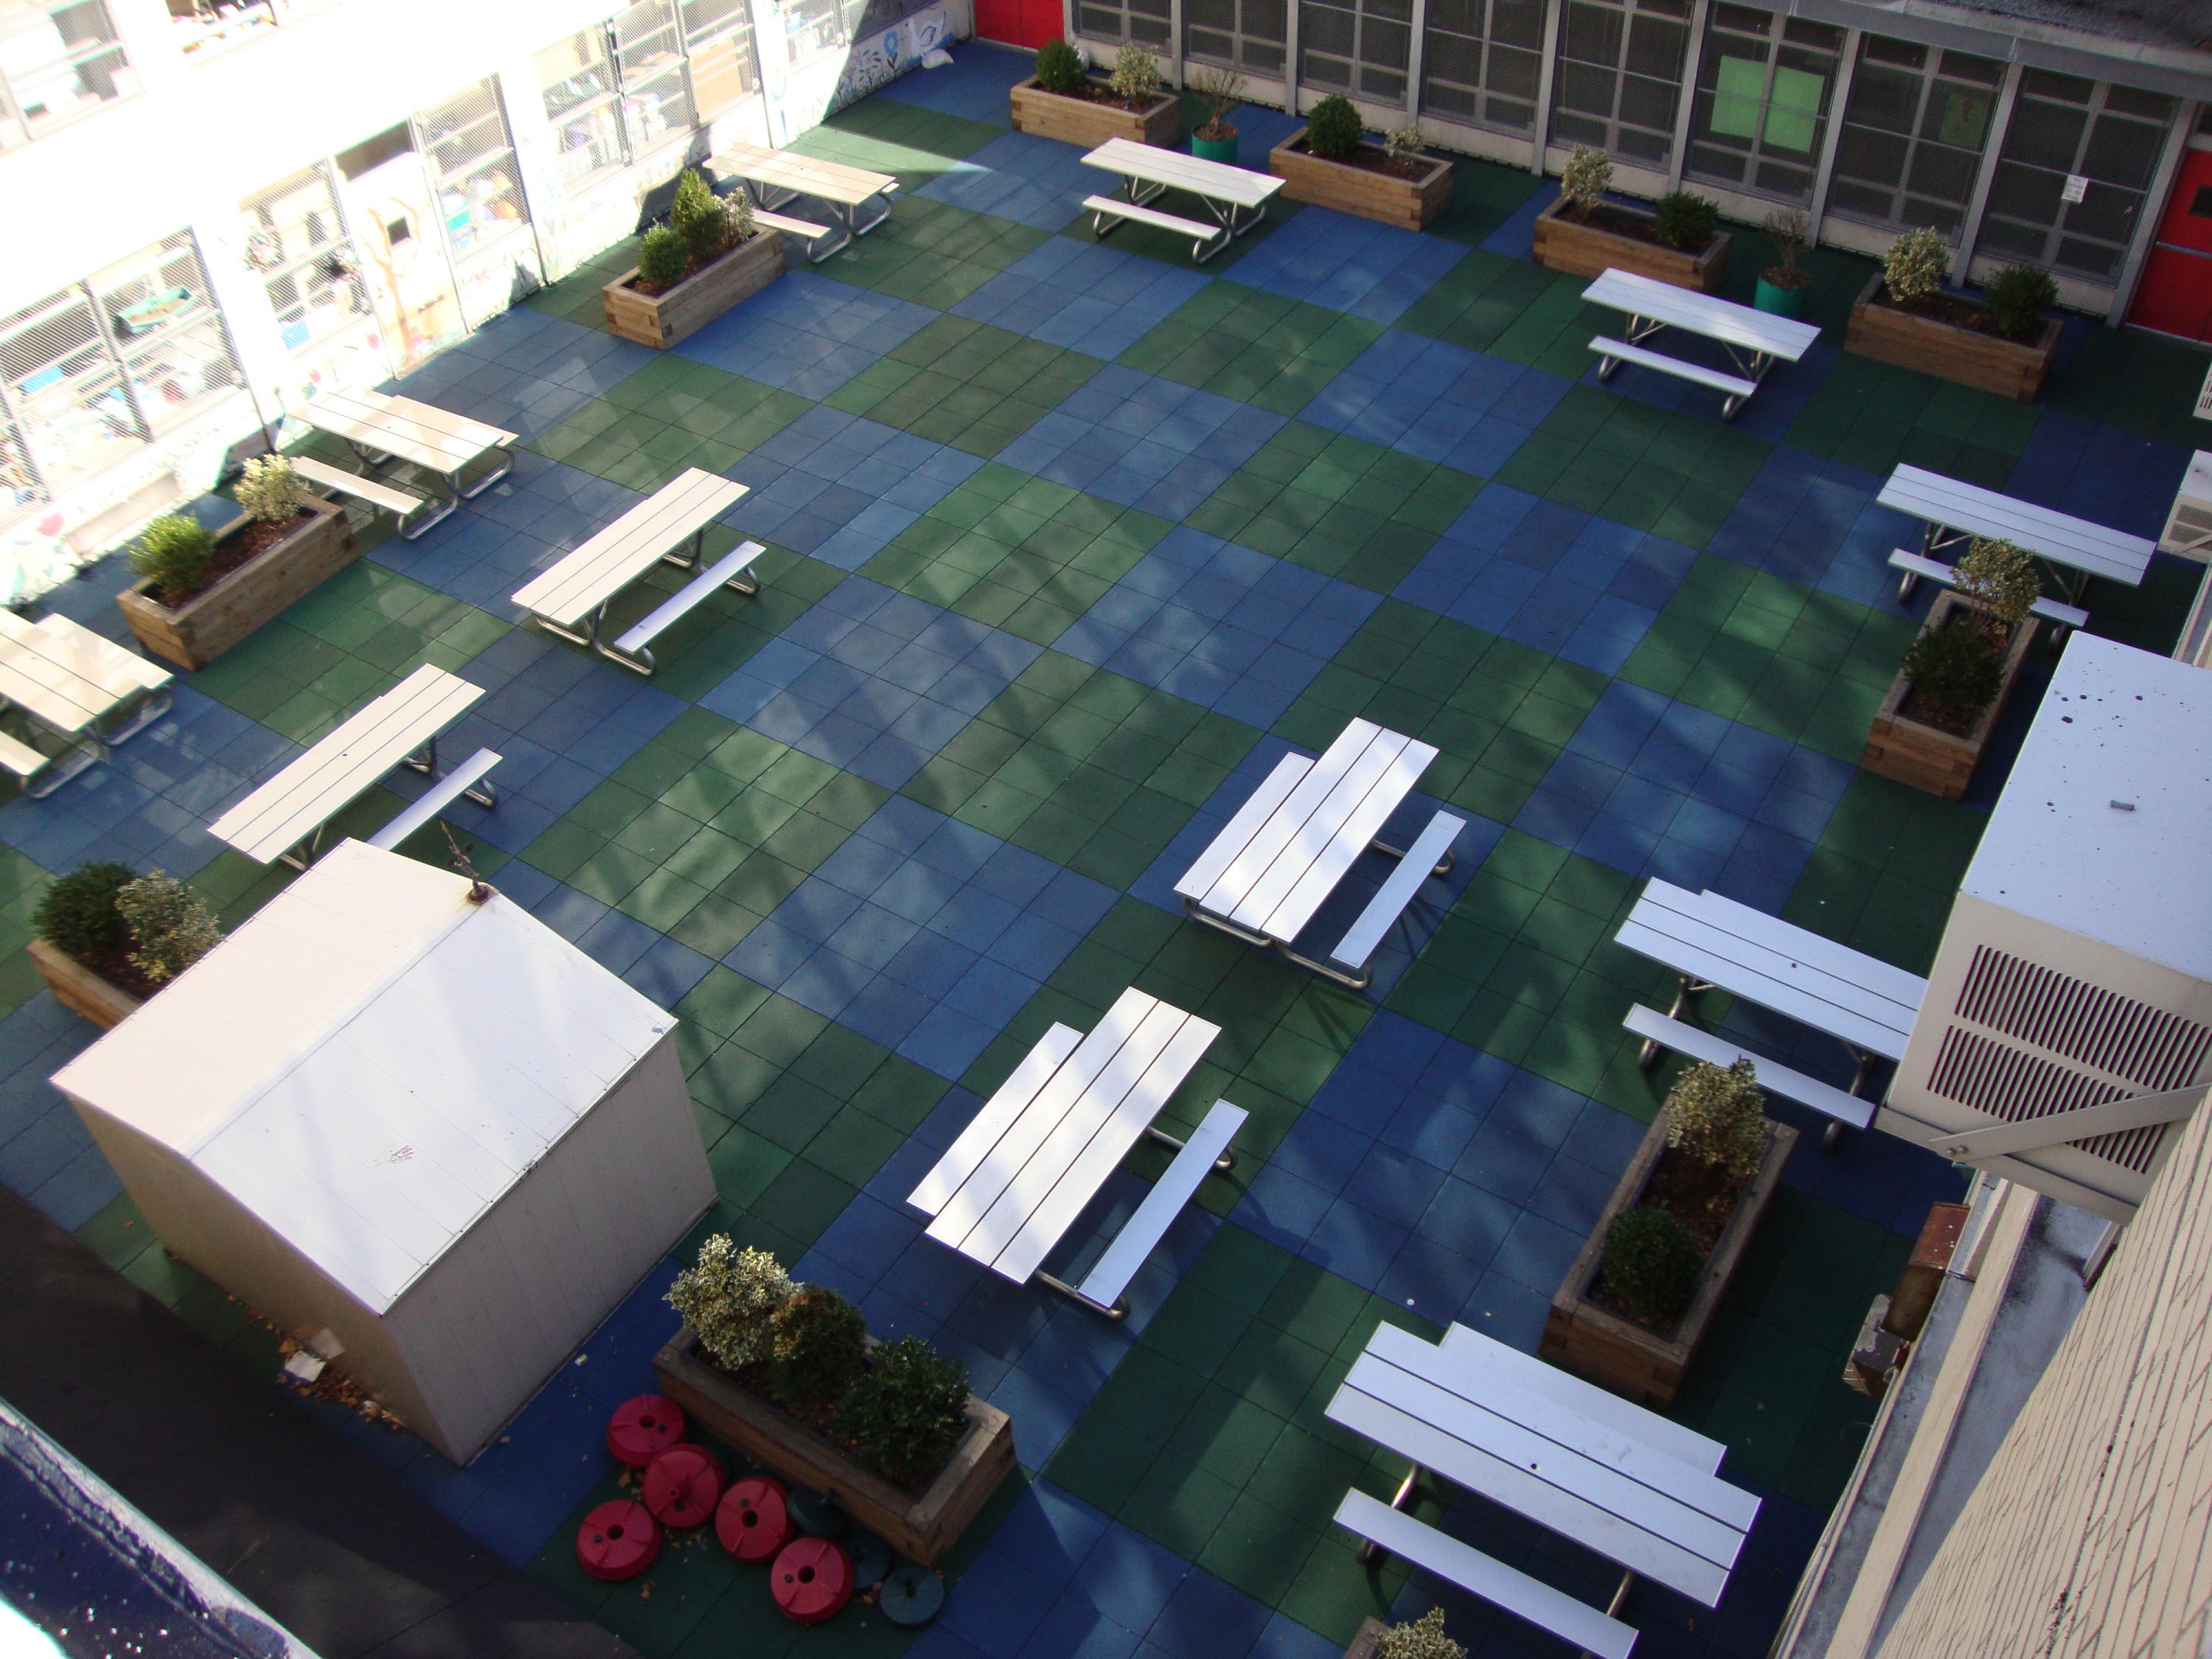 Public School Recreational Rooftop Playground Area Over Concrete Pavers d